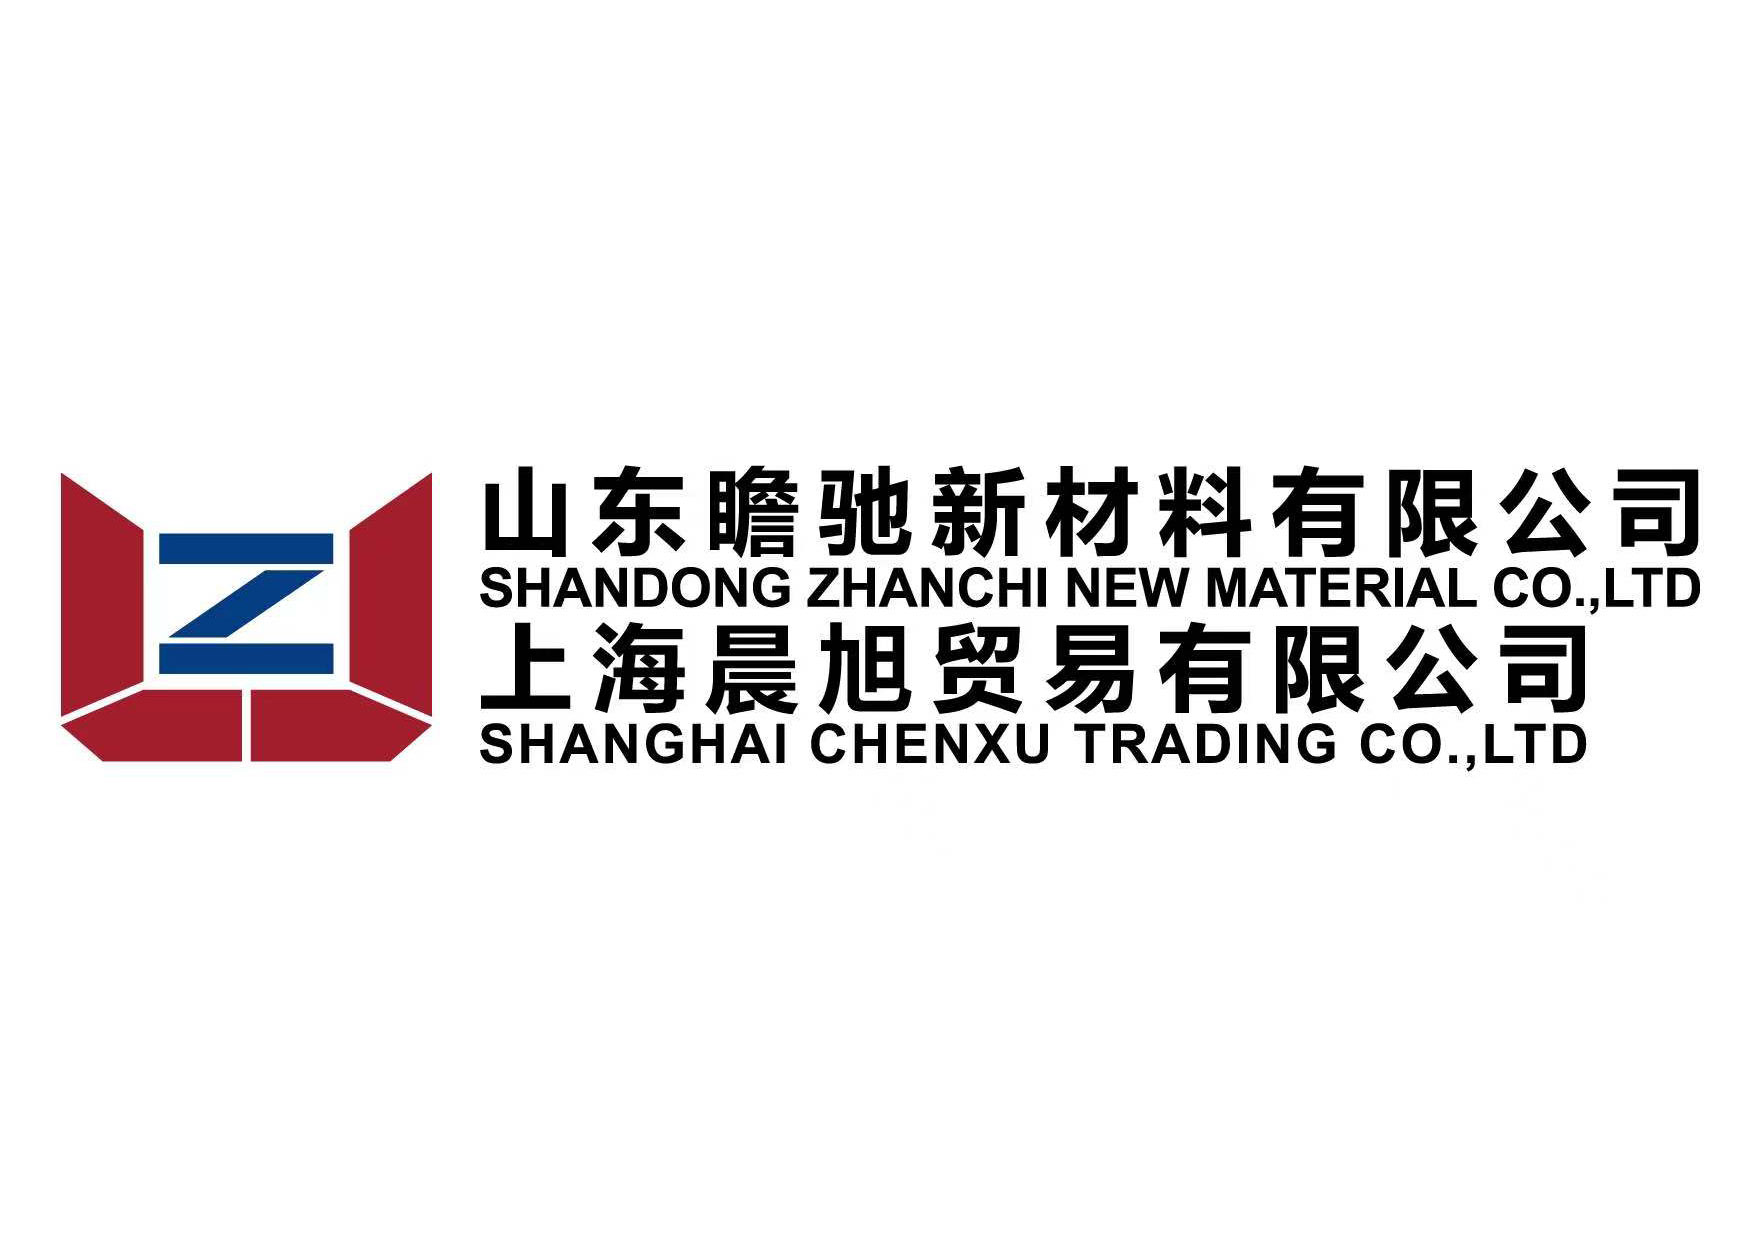 Shanghai Chenxu Trading Company etablerat